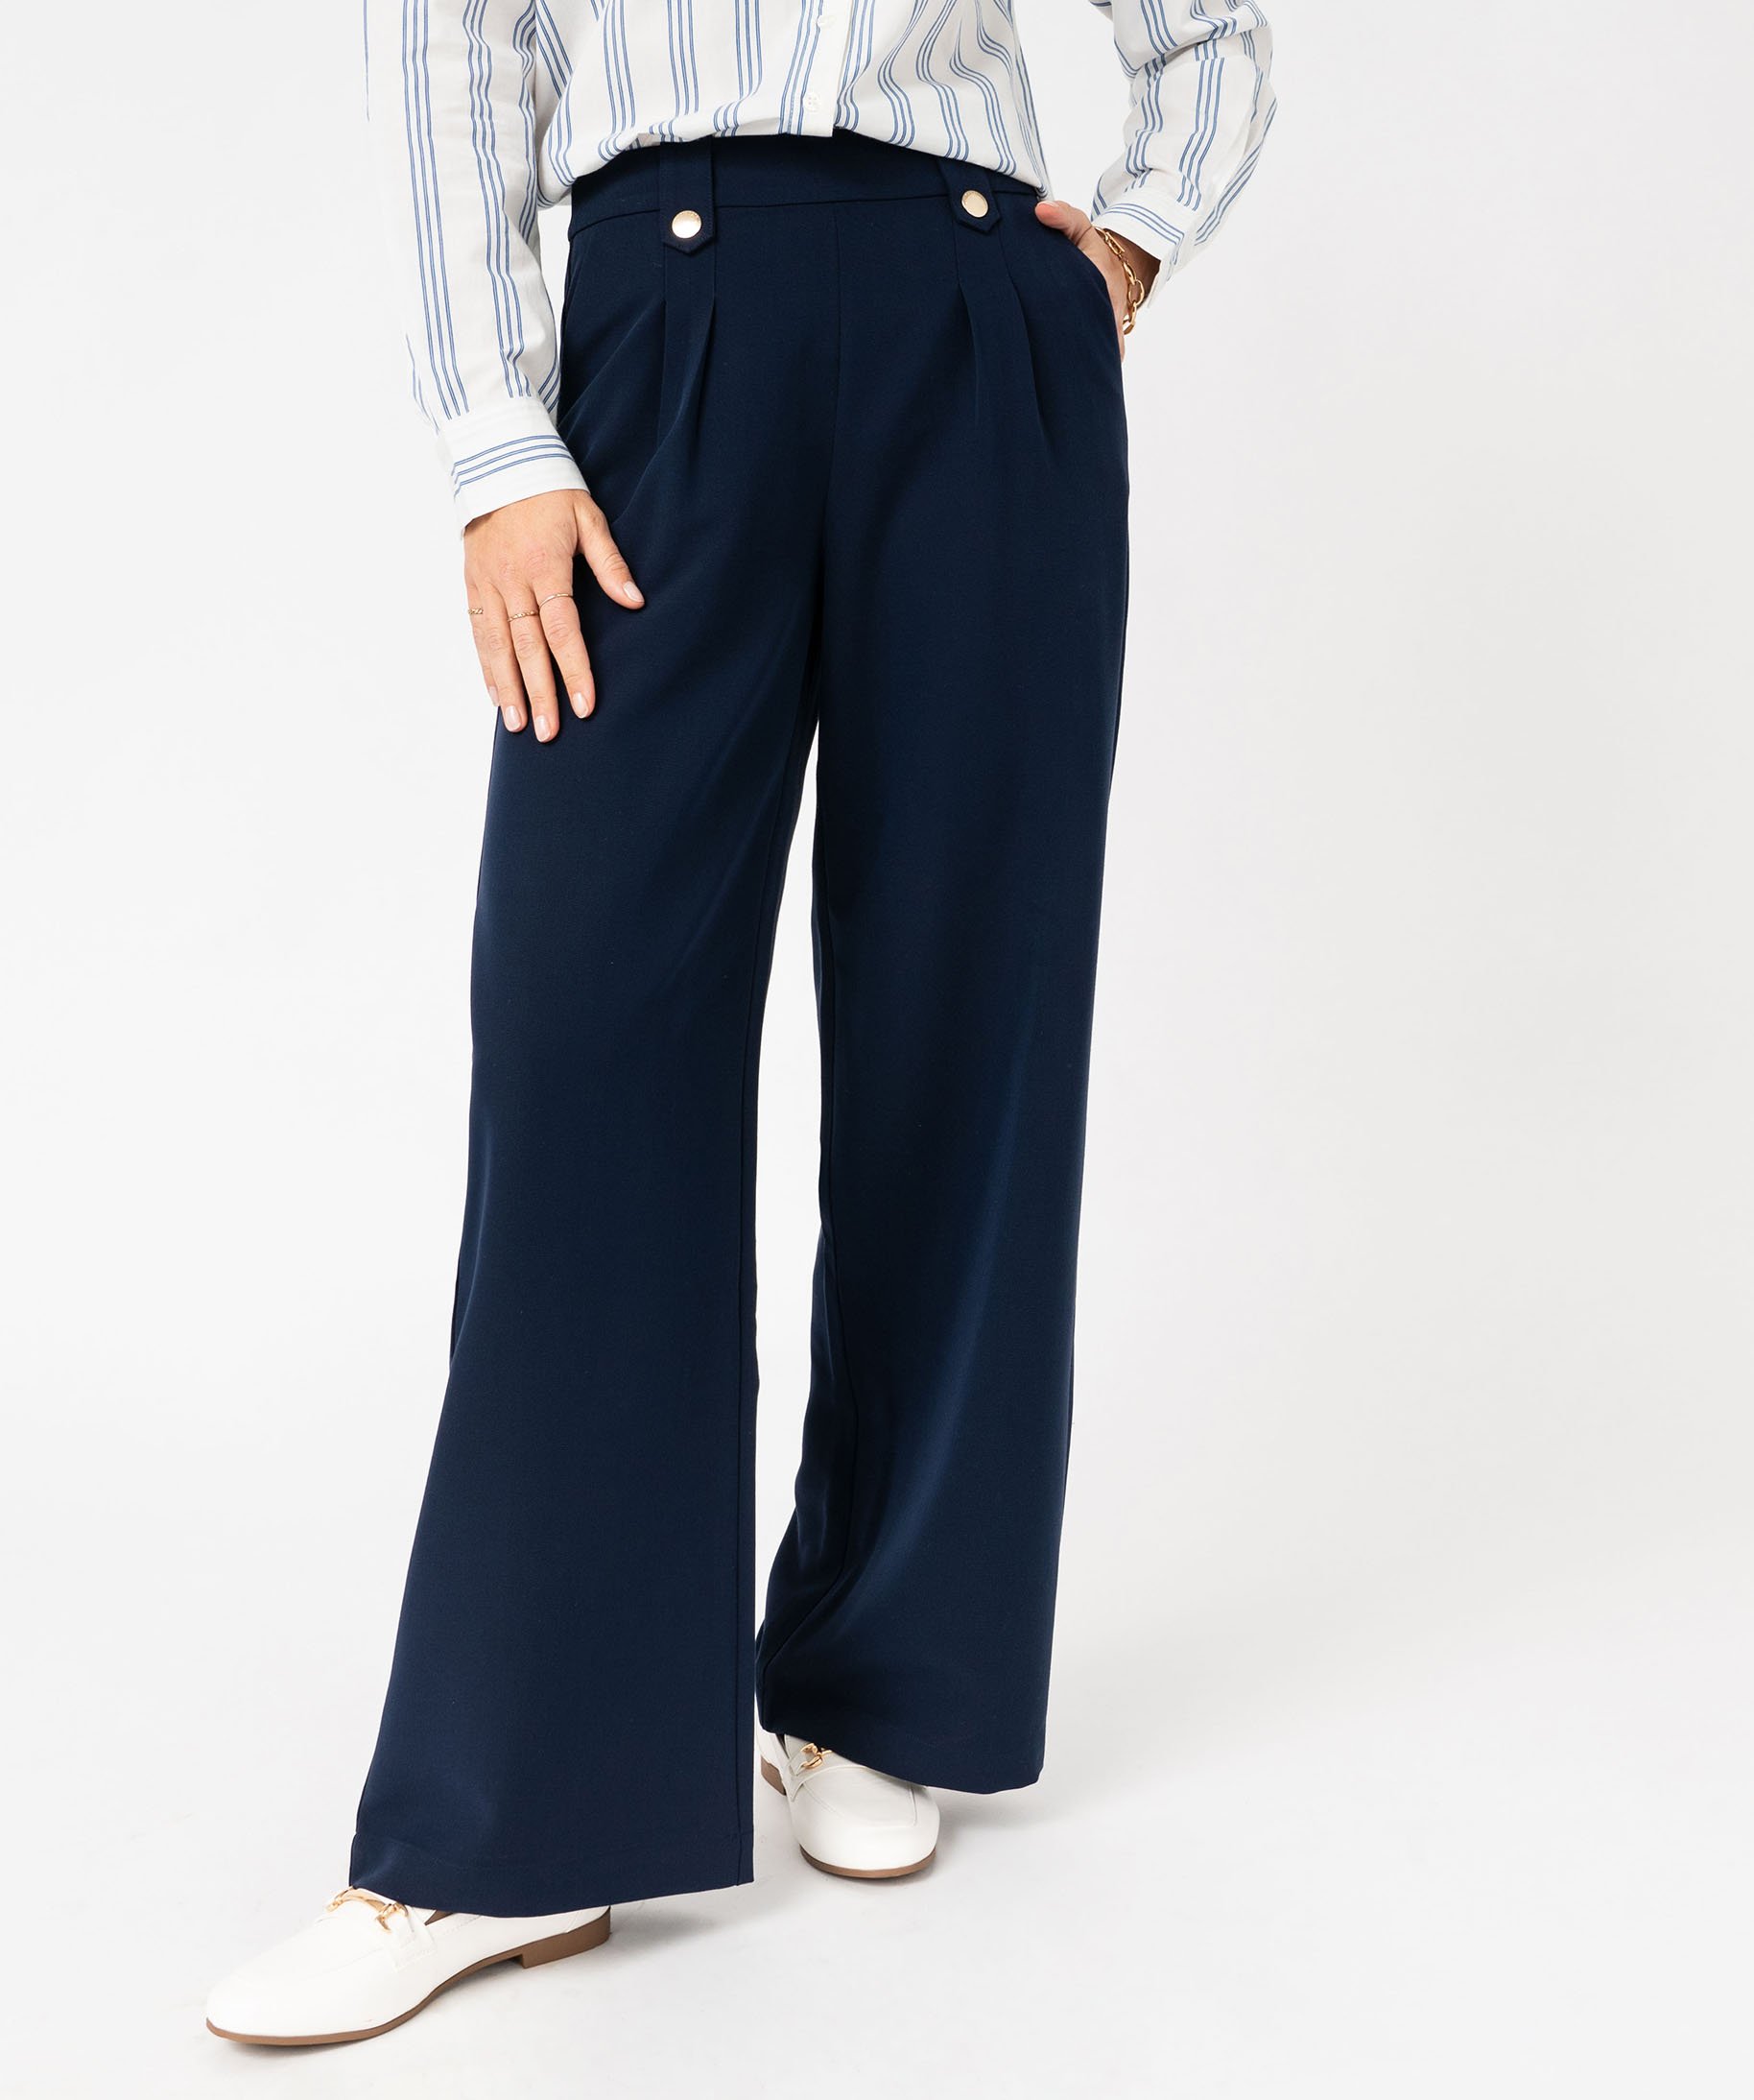 Pantalon en toile coupe large femme - LuluCastagnette bleu fonce | GEMO